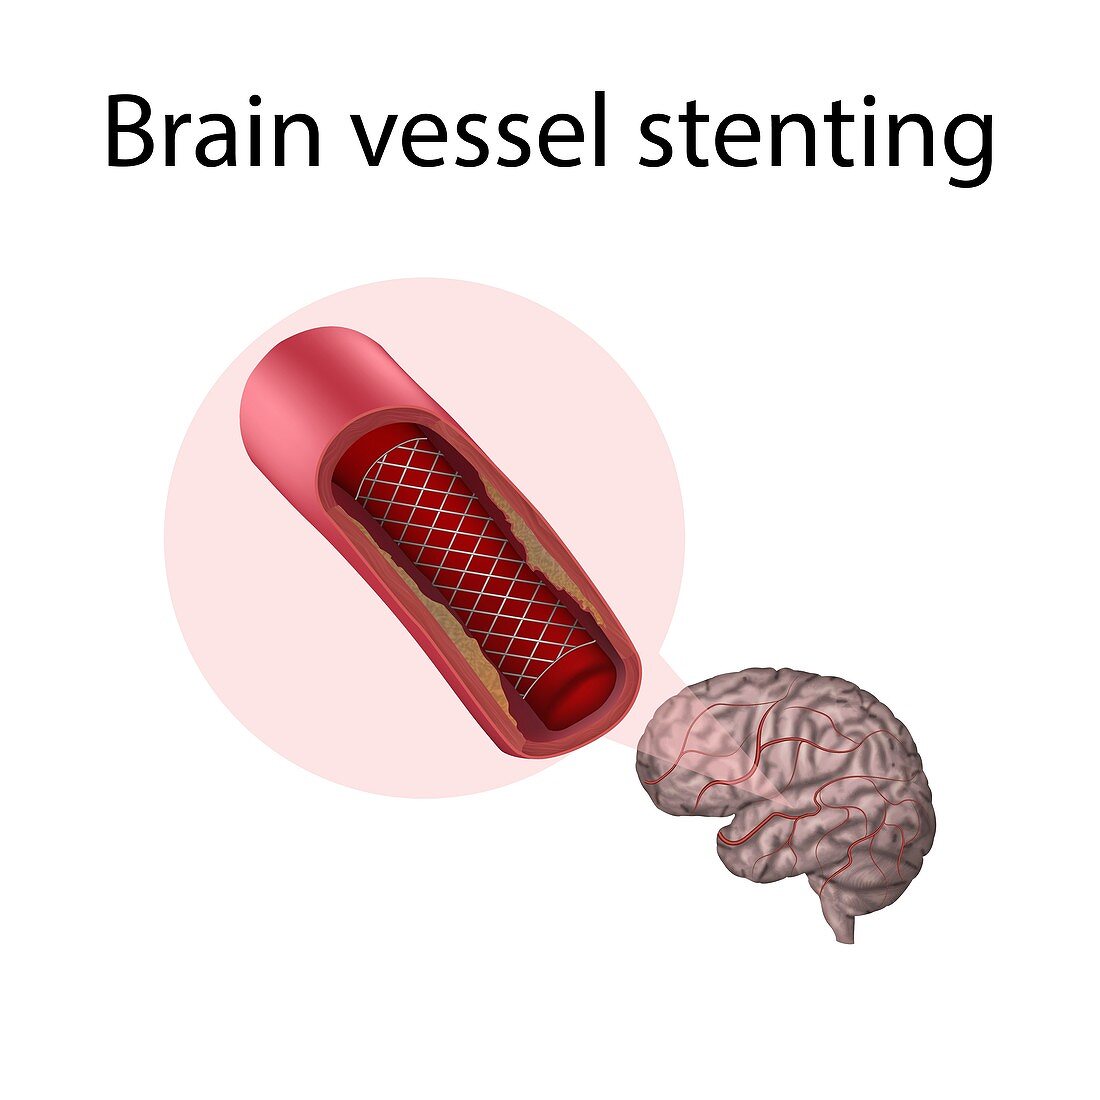 Brain vessel stenting, illustration